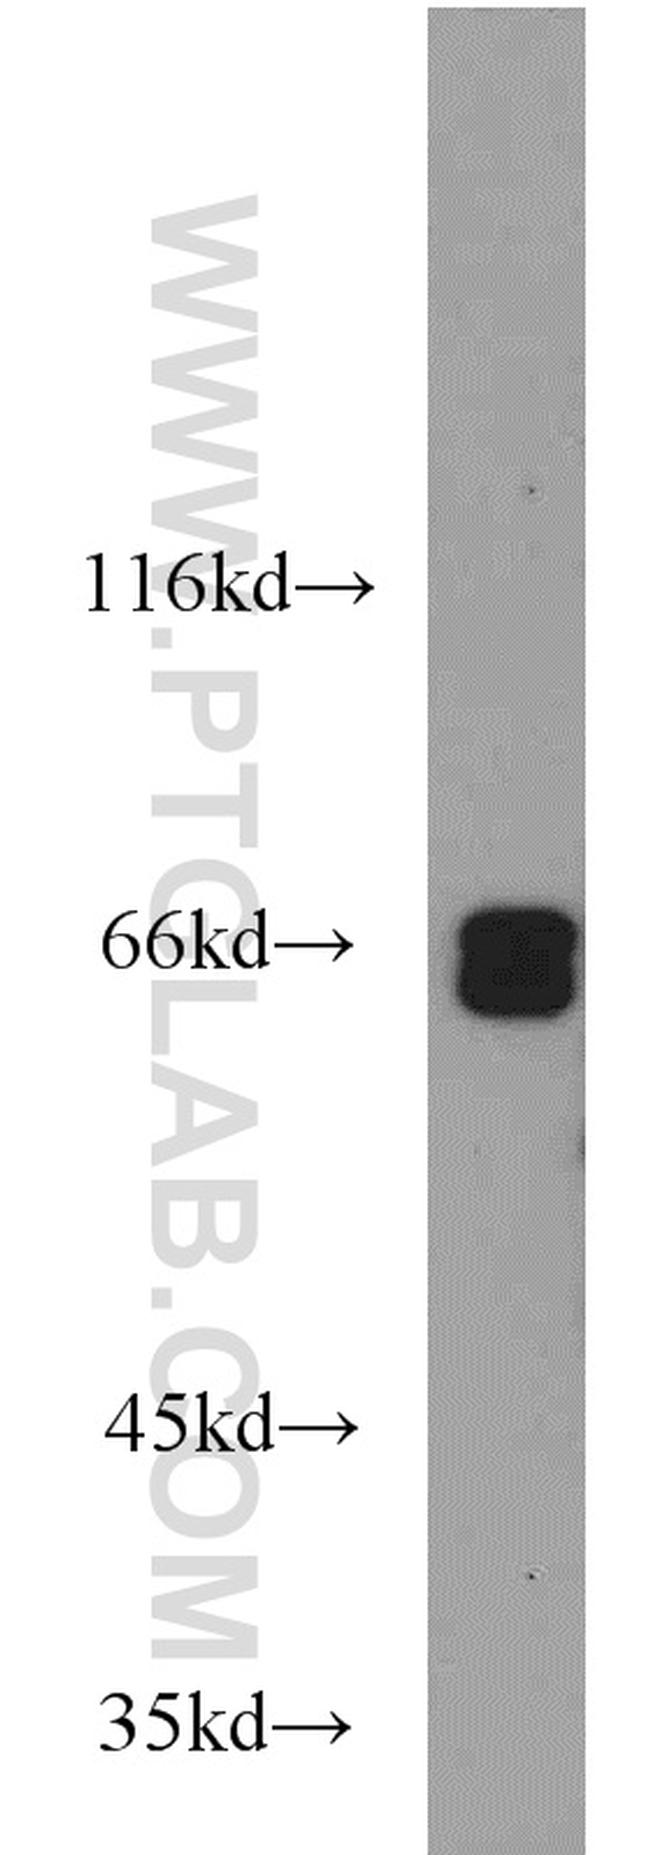 MYEF2 Antibody in Western Blot (WB)